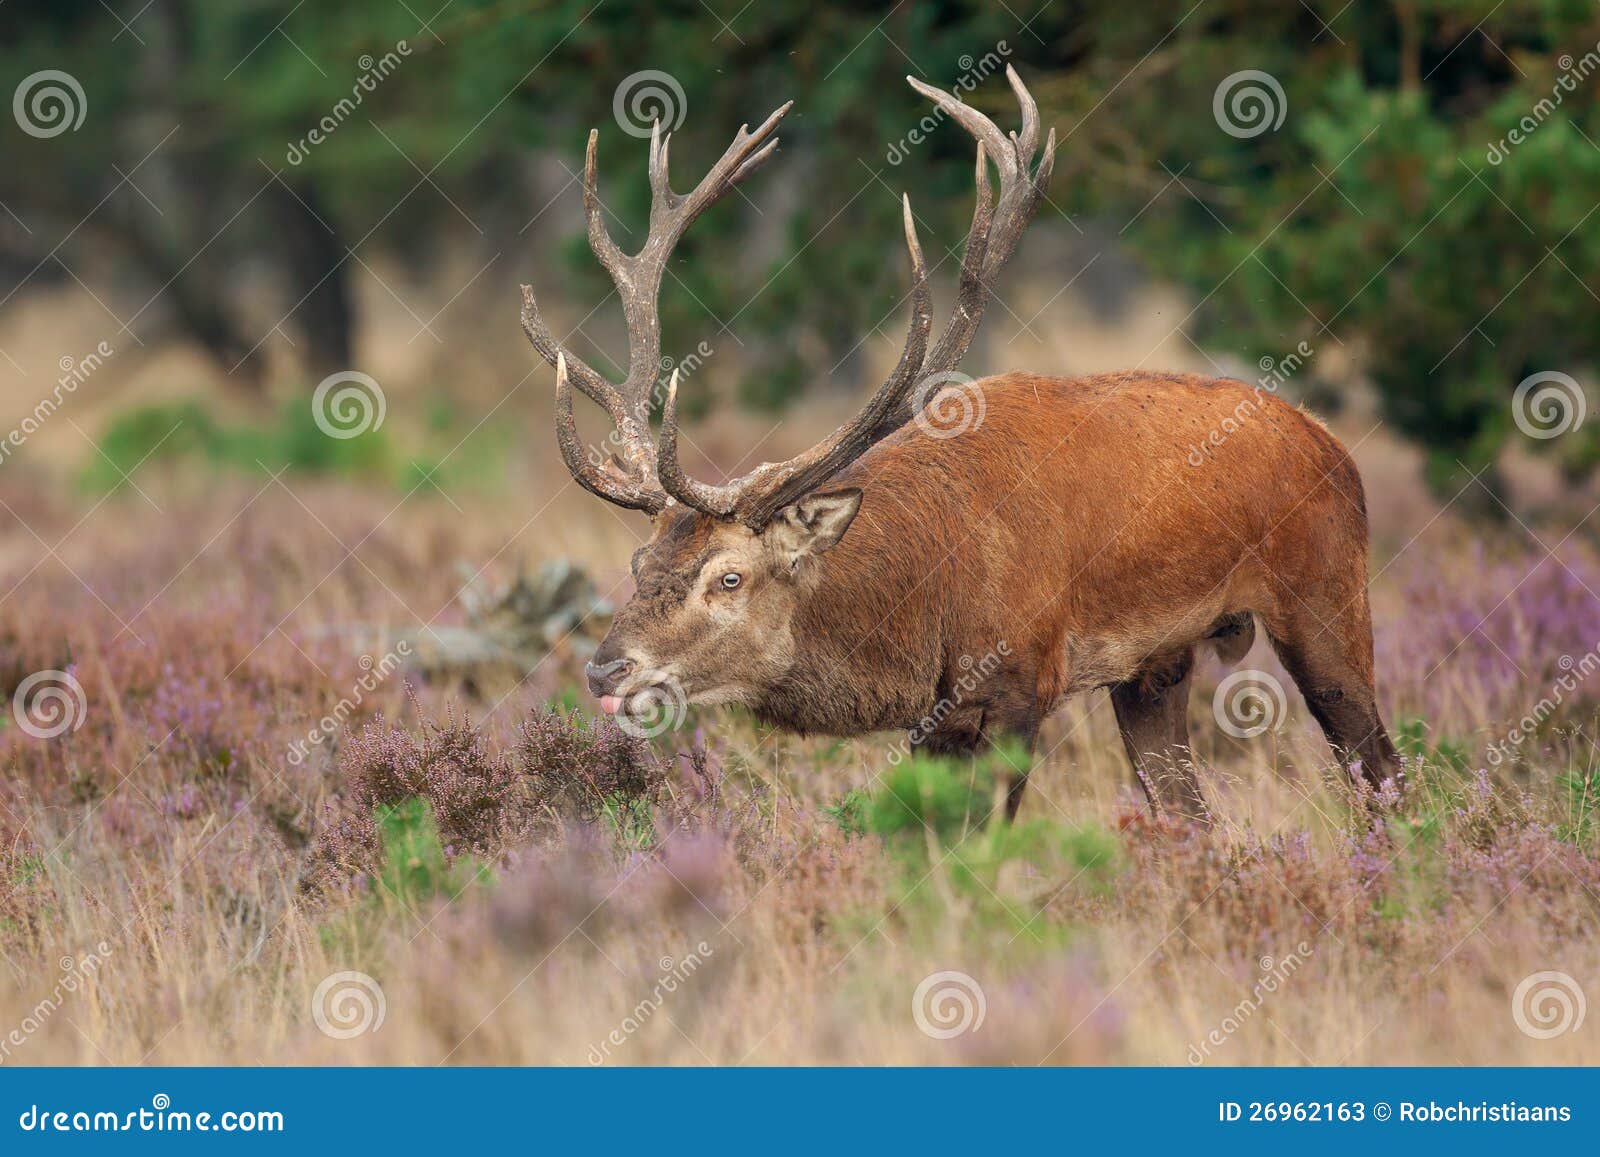 red deer (cervus elaphus).